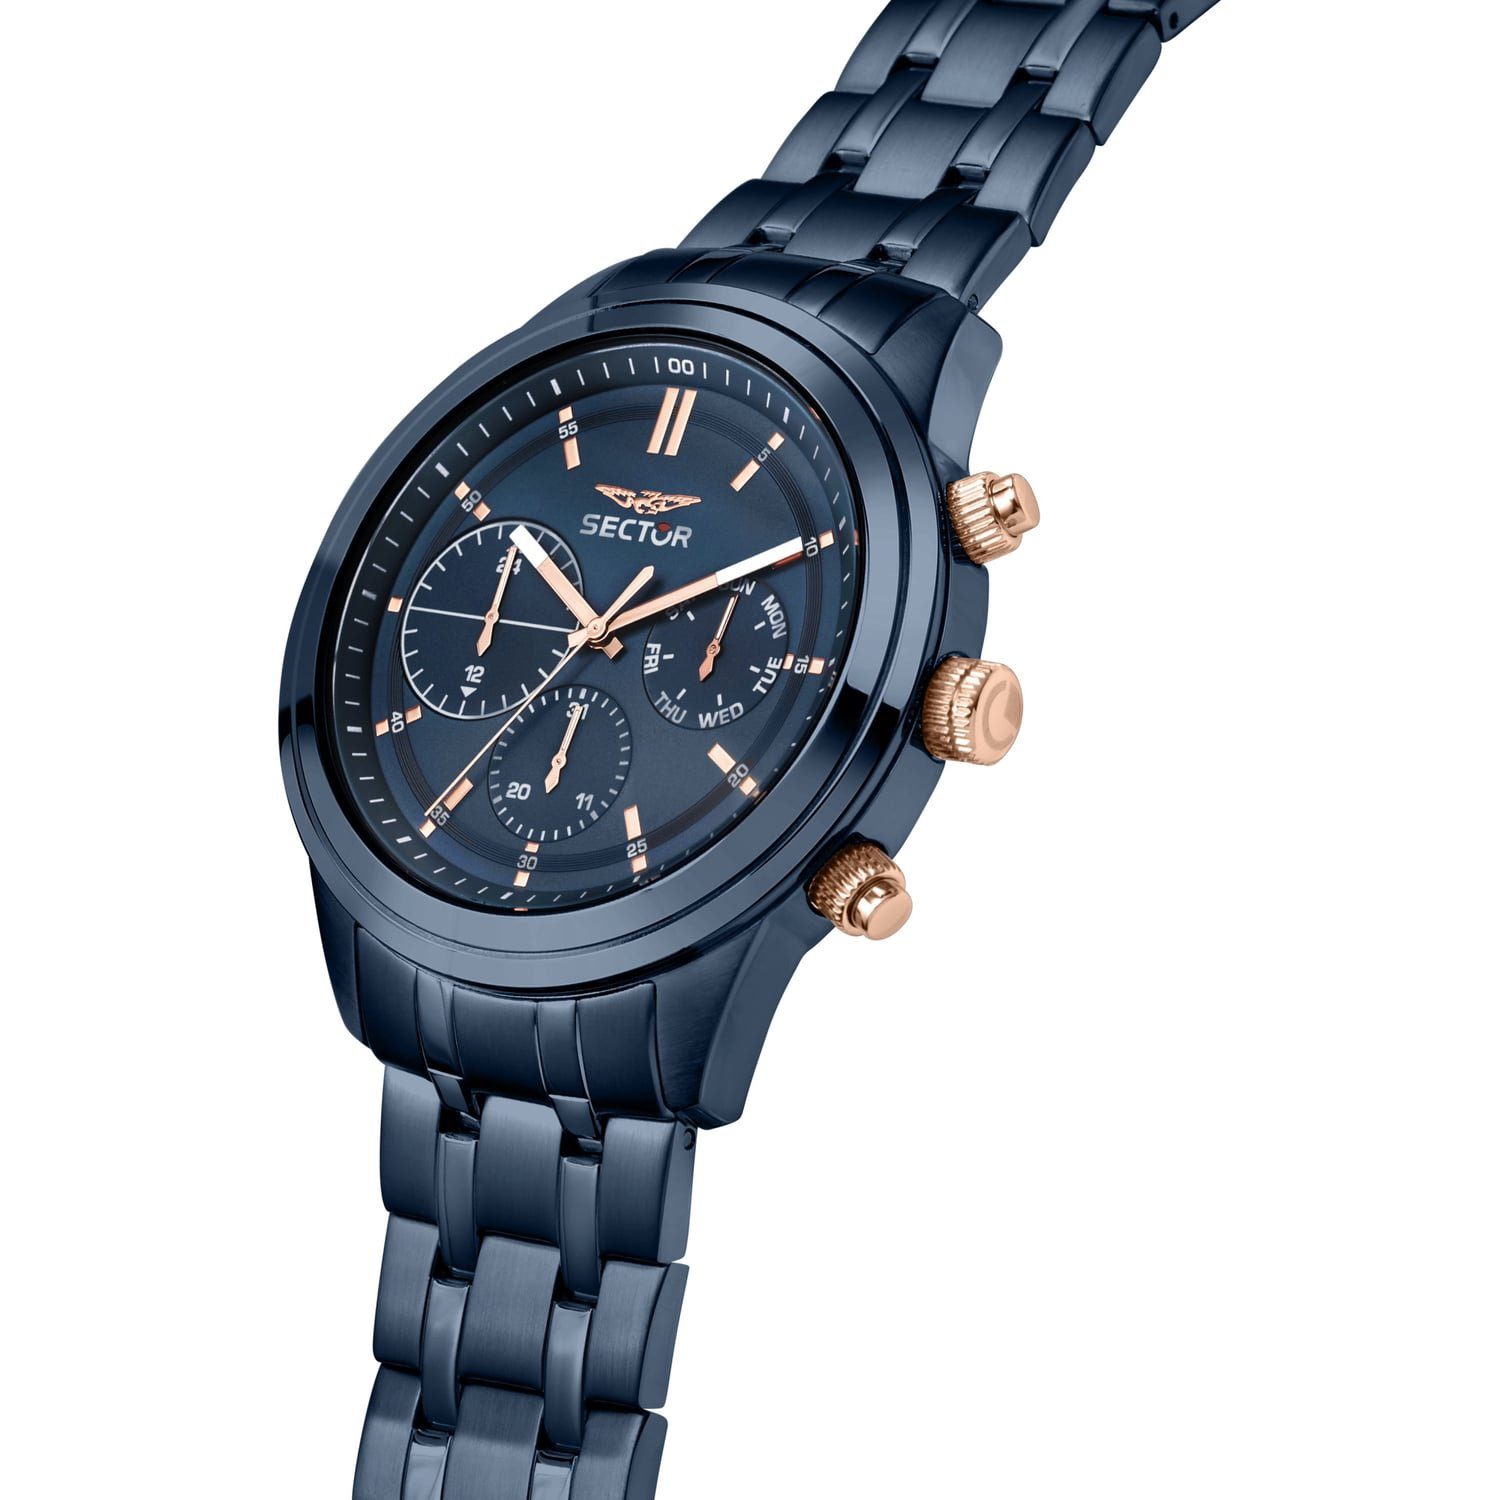 Multifunktion, groß Multifunktionsuhr Armbanduhr (43mm), Herren Armbanduhr Herren Fashion Sector Sector Edelstahlarmband blau, rund,